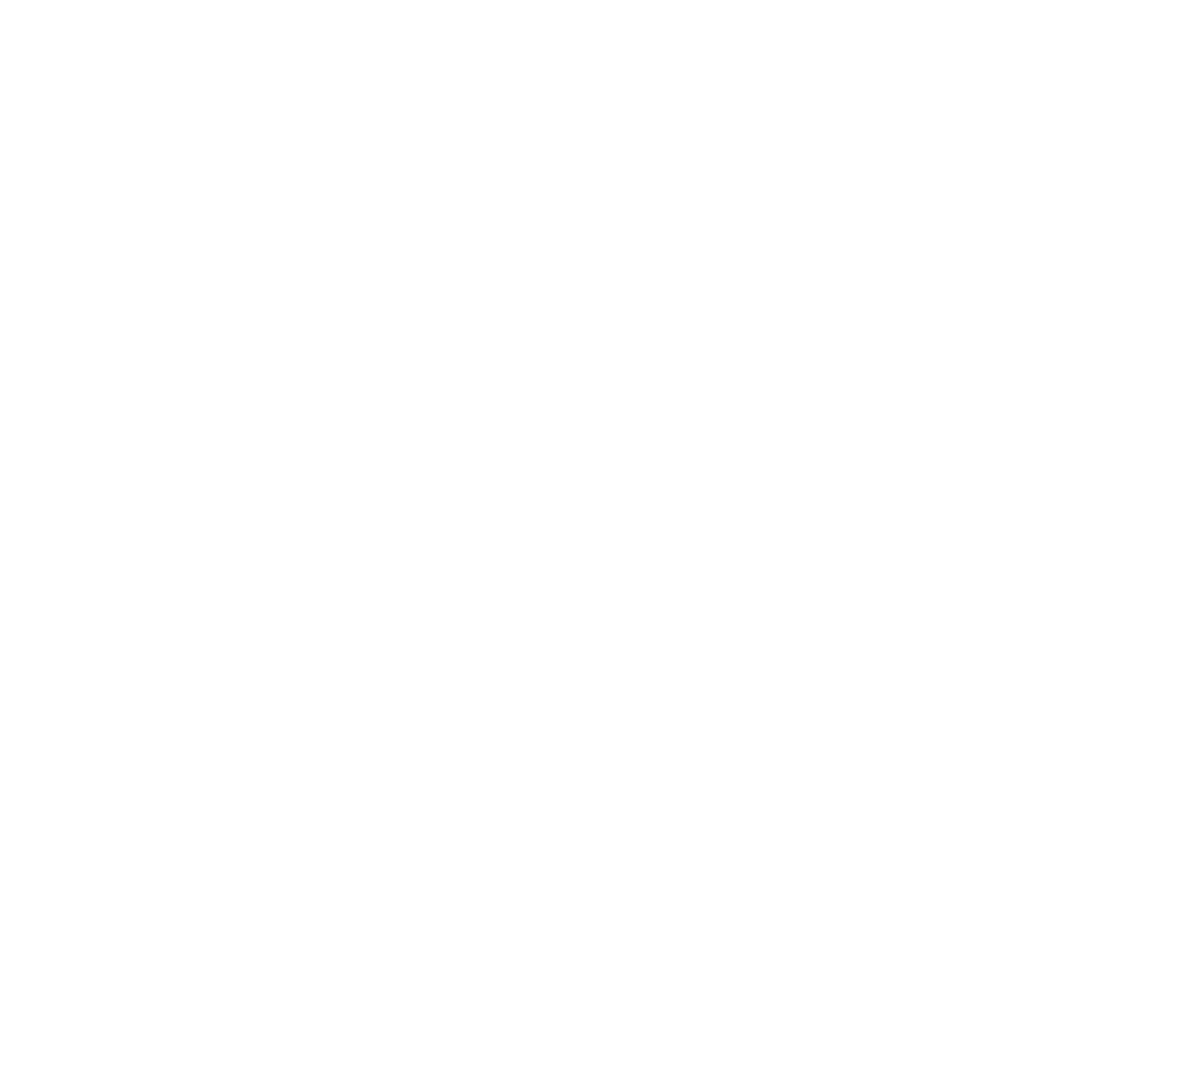 SIDEWALK COFFEE | ROAST.BREW & BAKE EVERY DAY